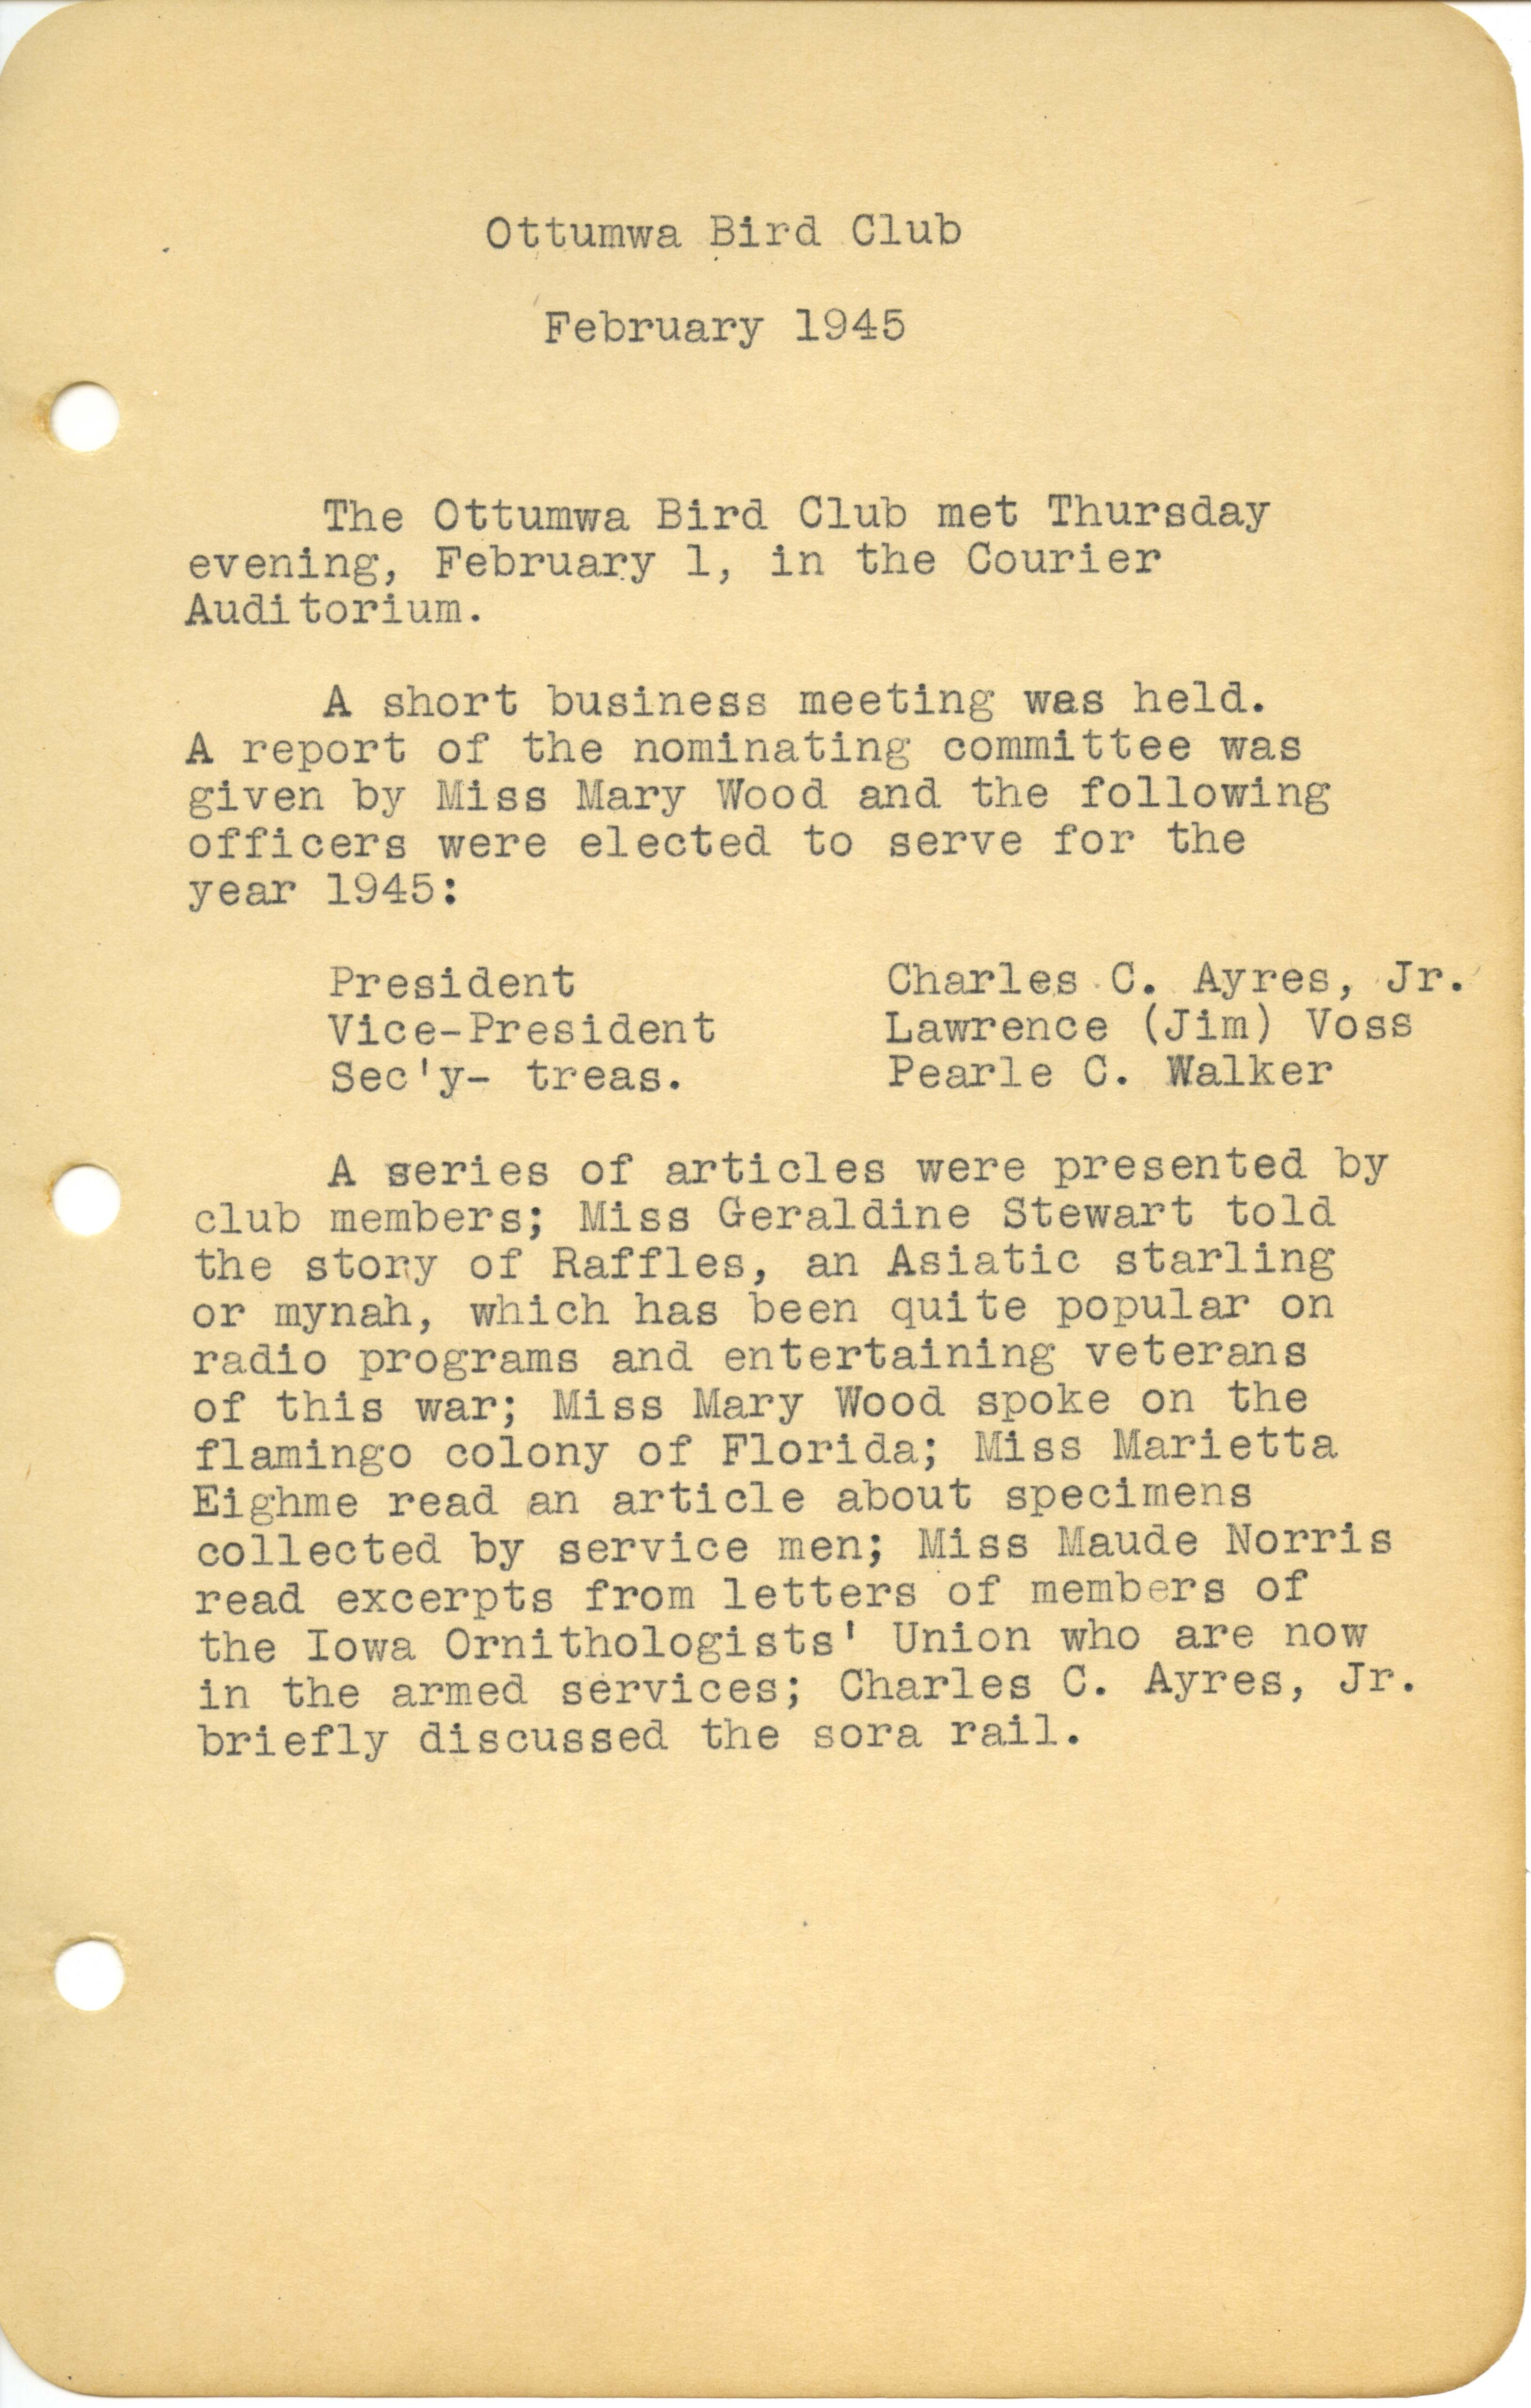  Ottumwa Bird Club meeting minutes, February 1, 1945 